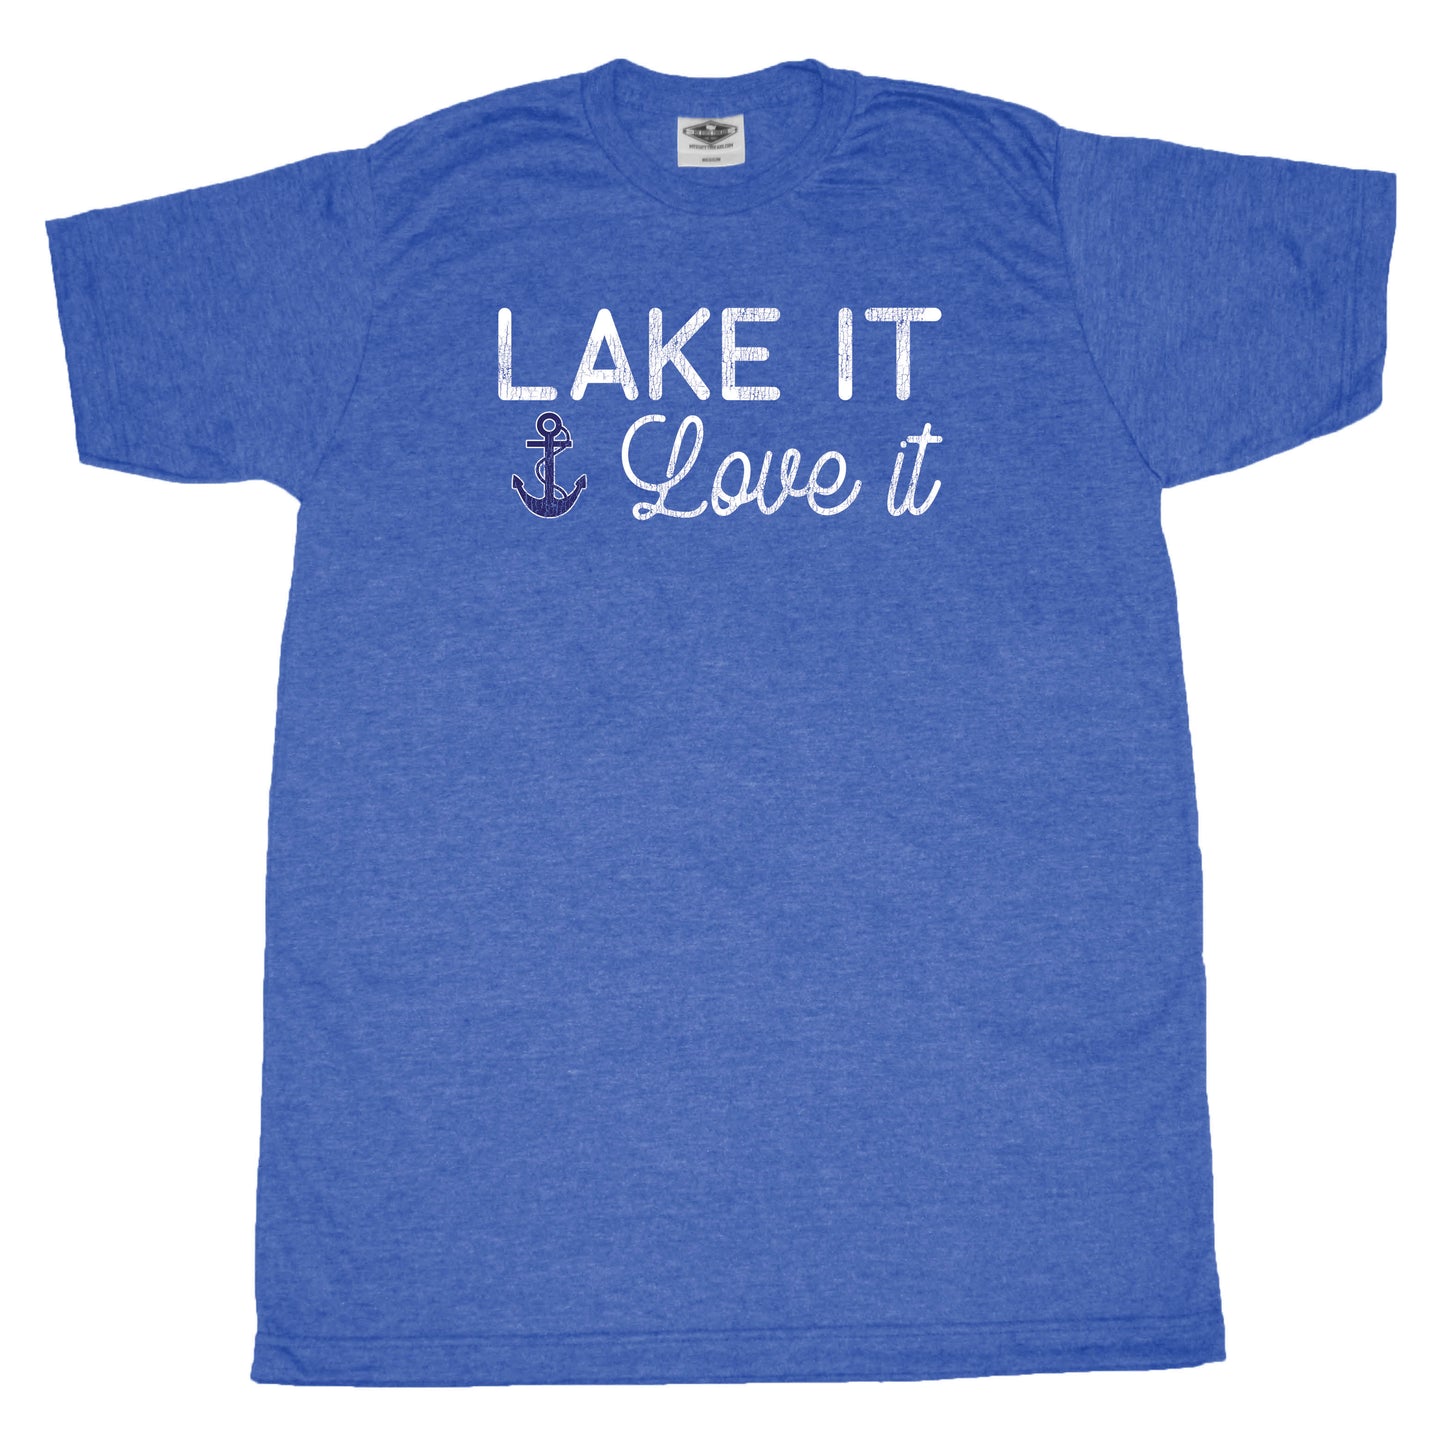 Lake it Love it - Unisex Tee